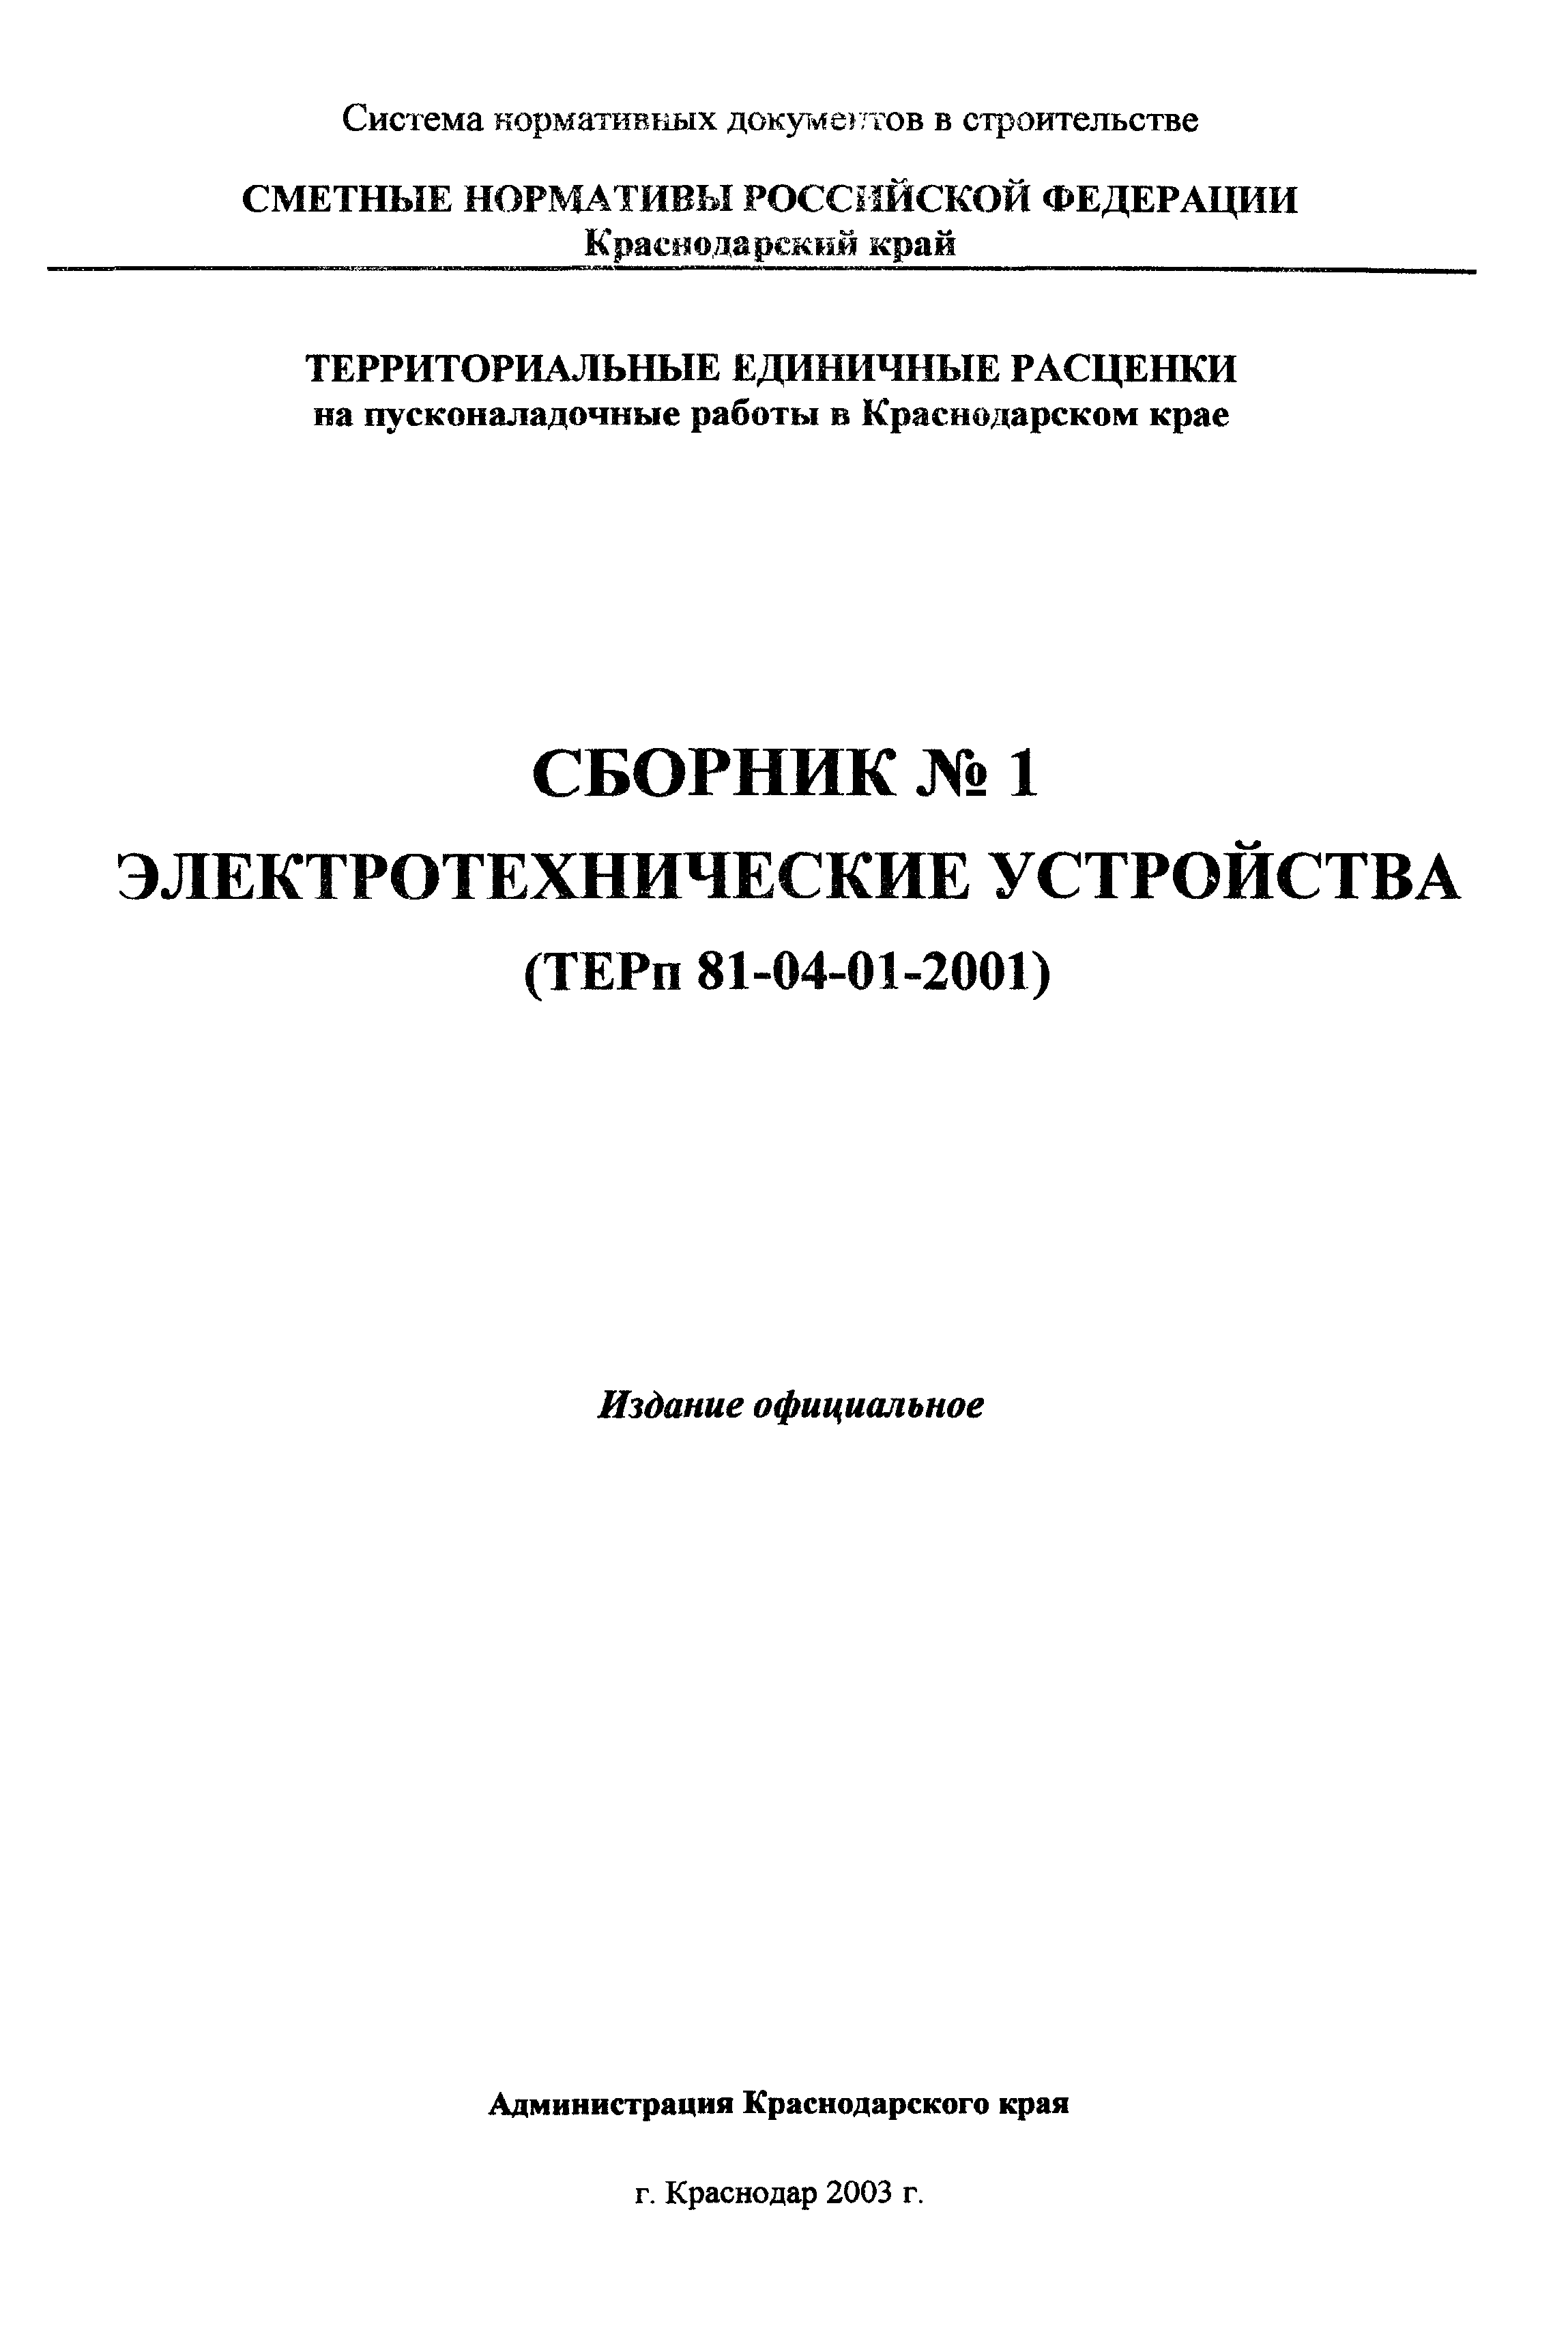 ТЕРп Краснодарский край 2001-01